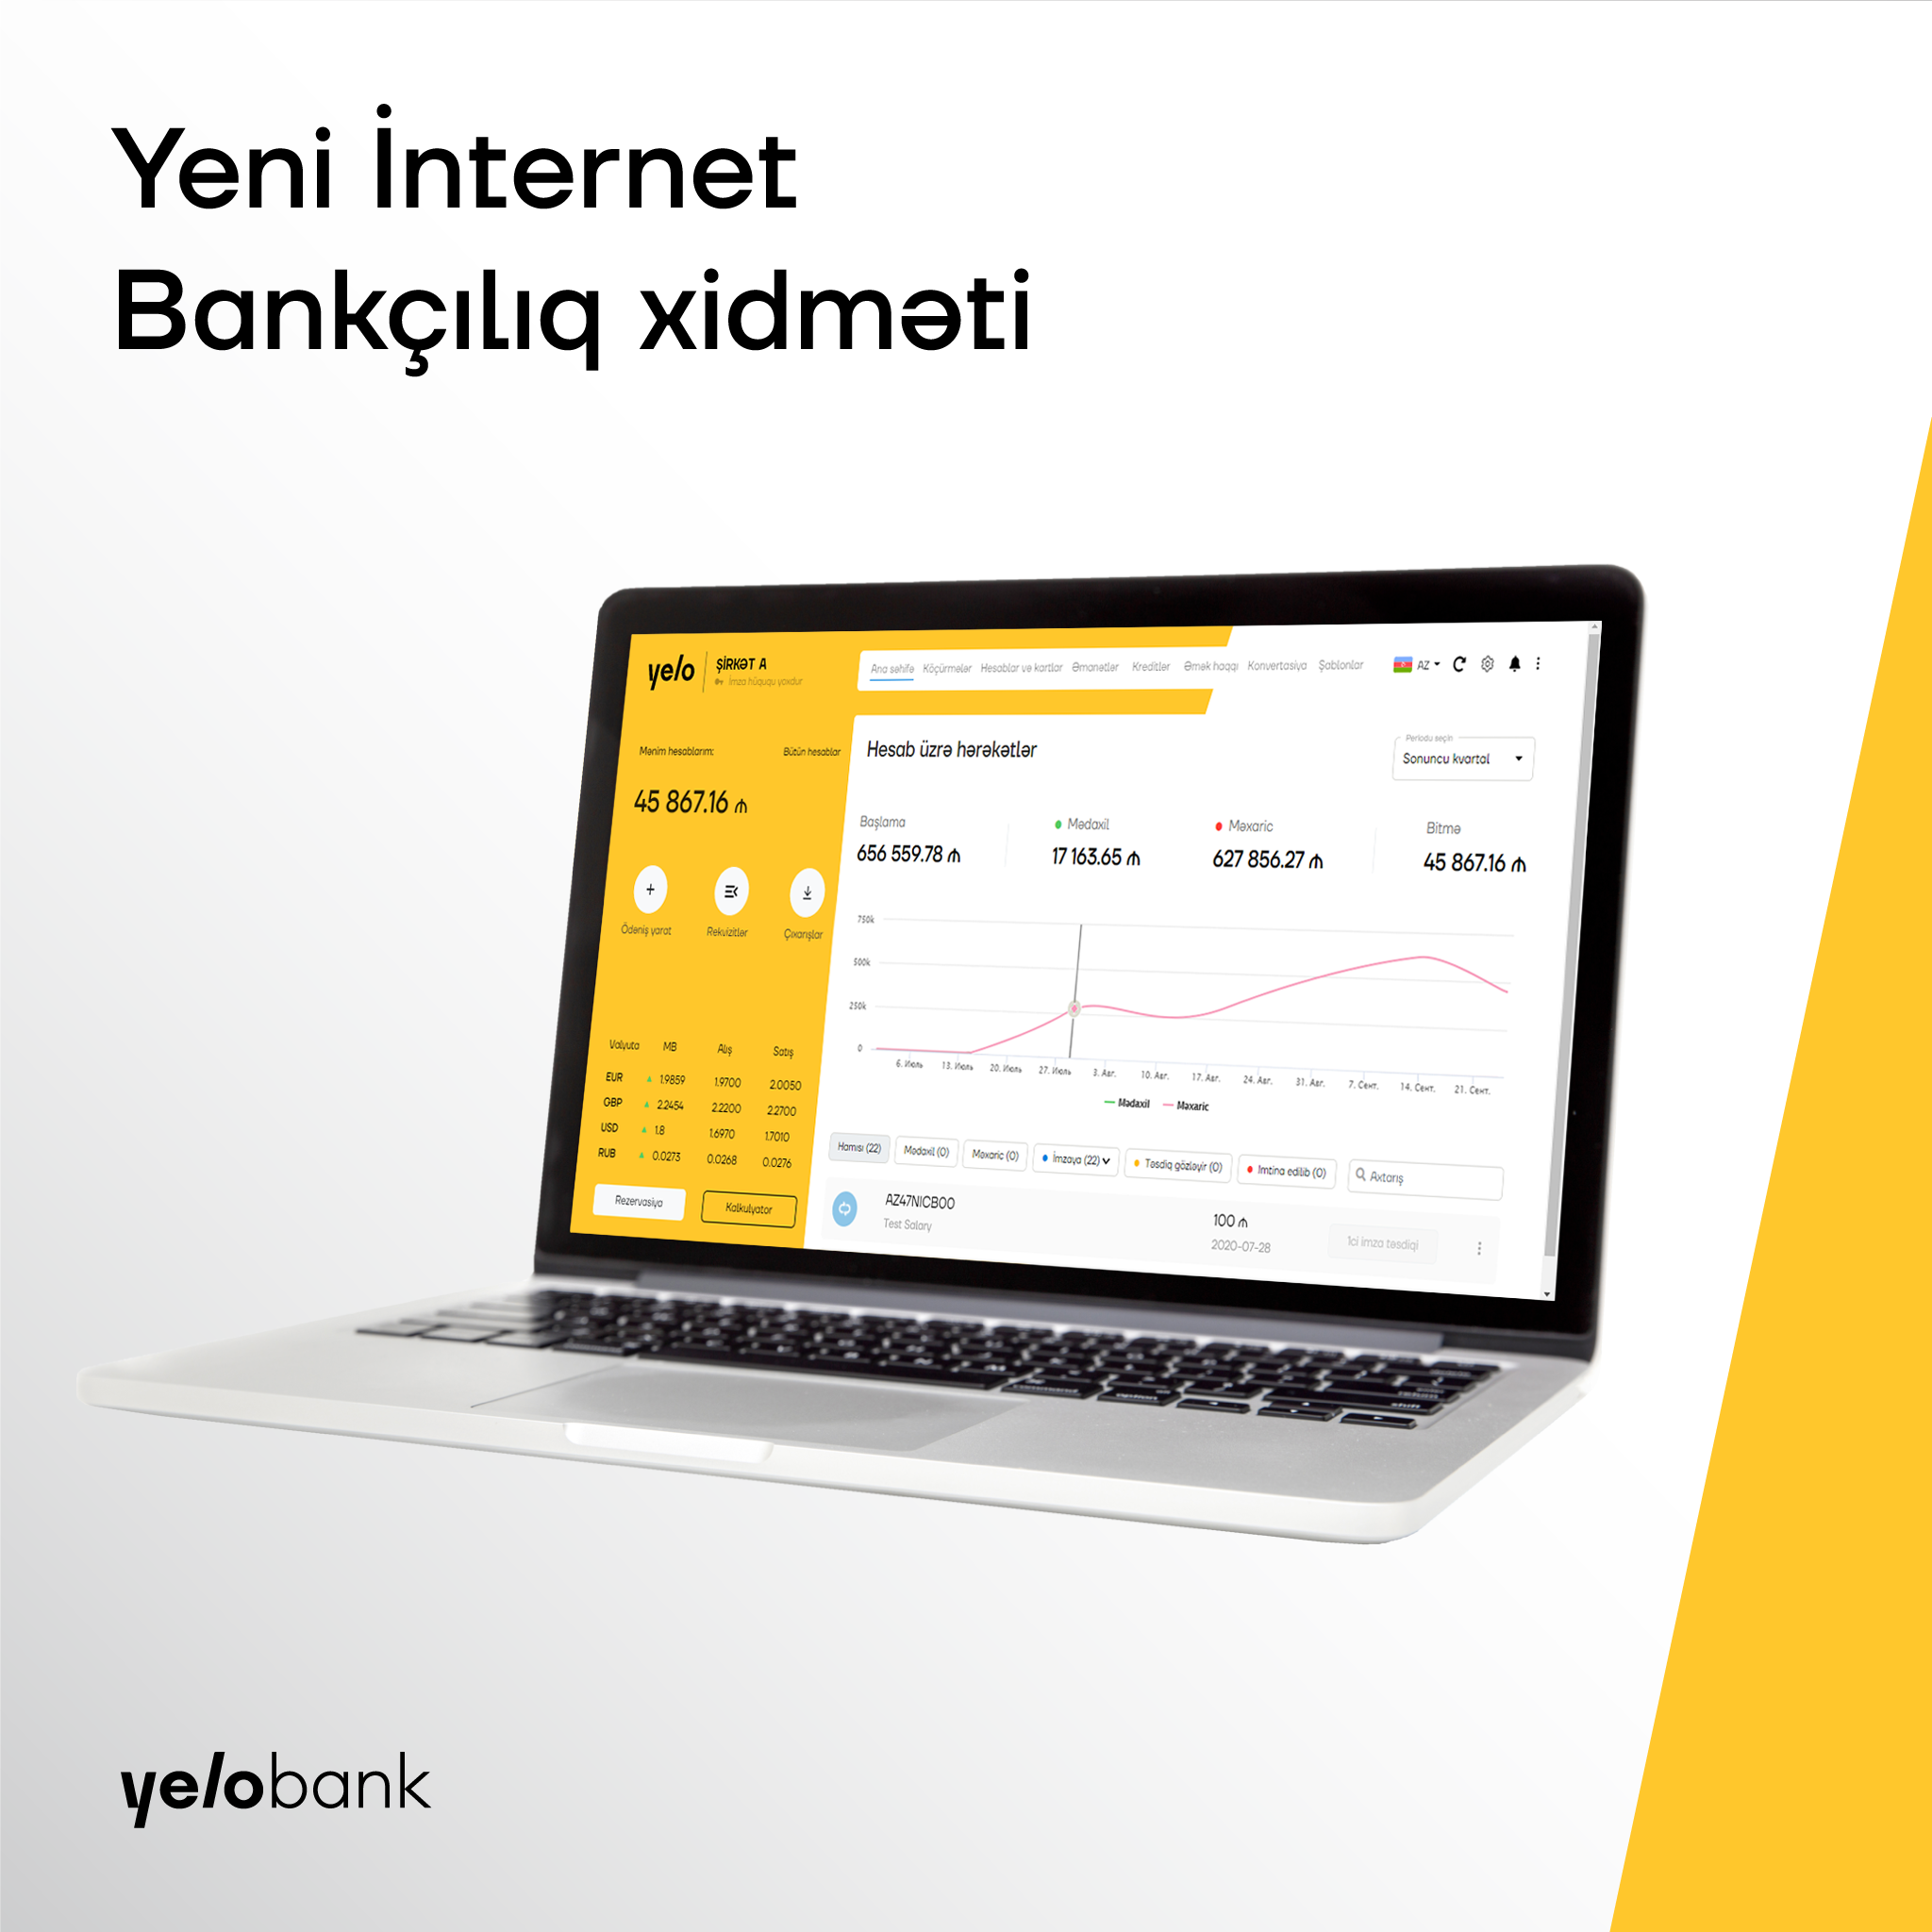 Yelo Bank представил новую услугу интернет банкинга